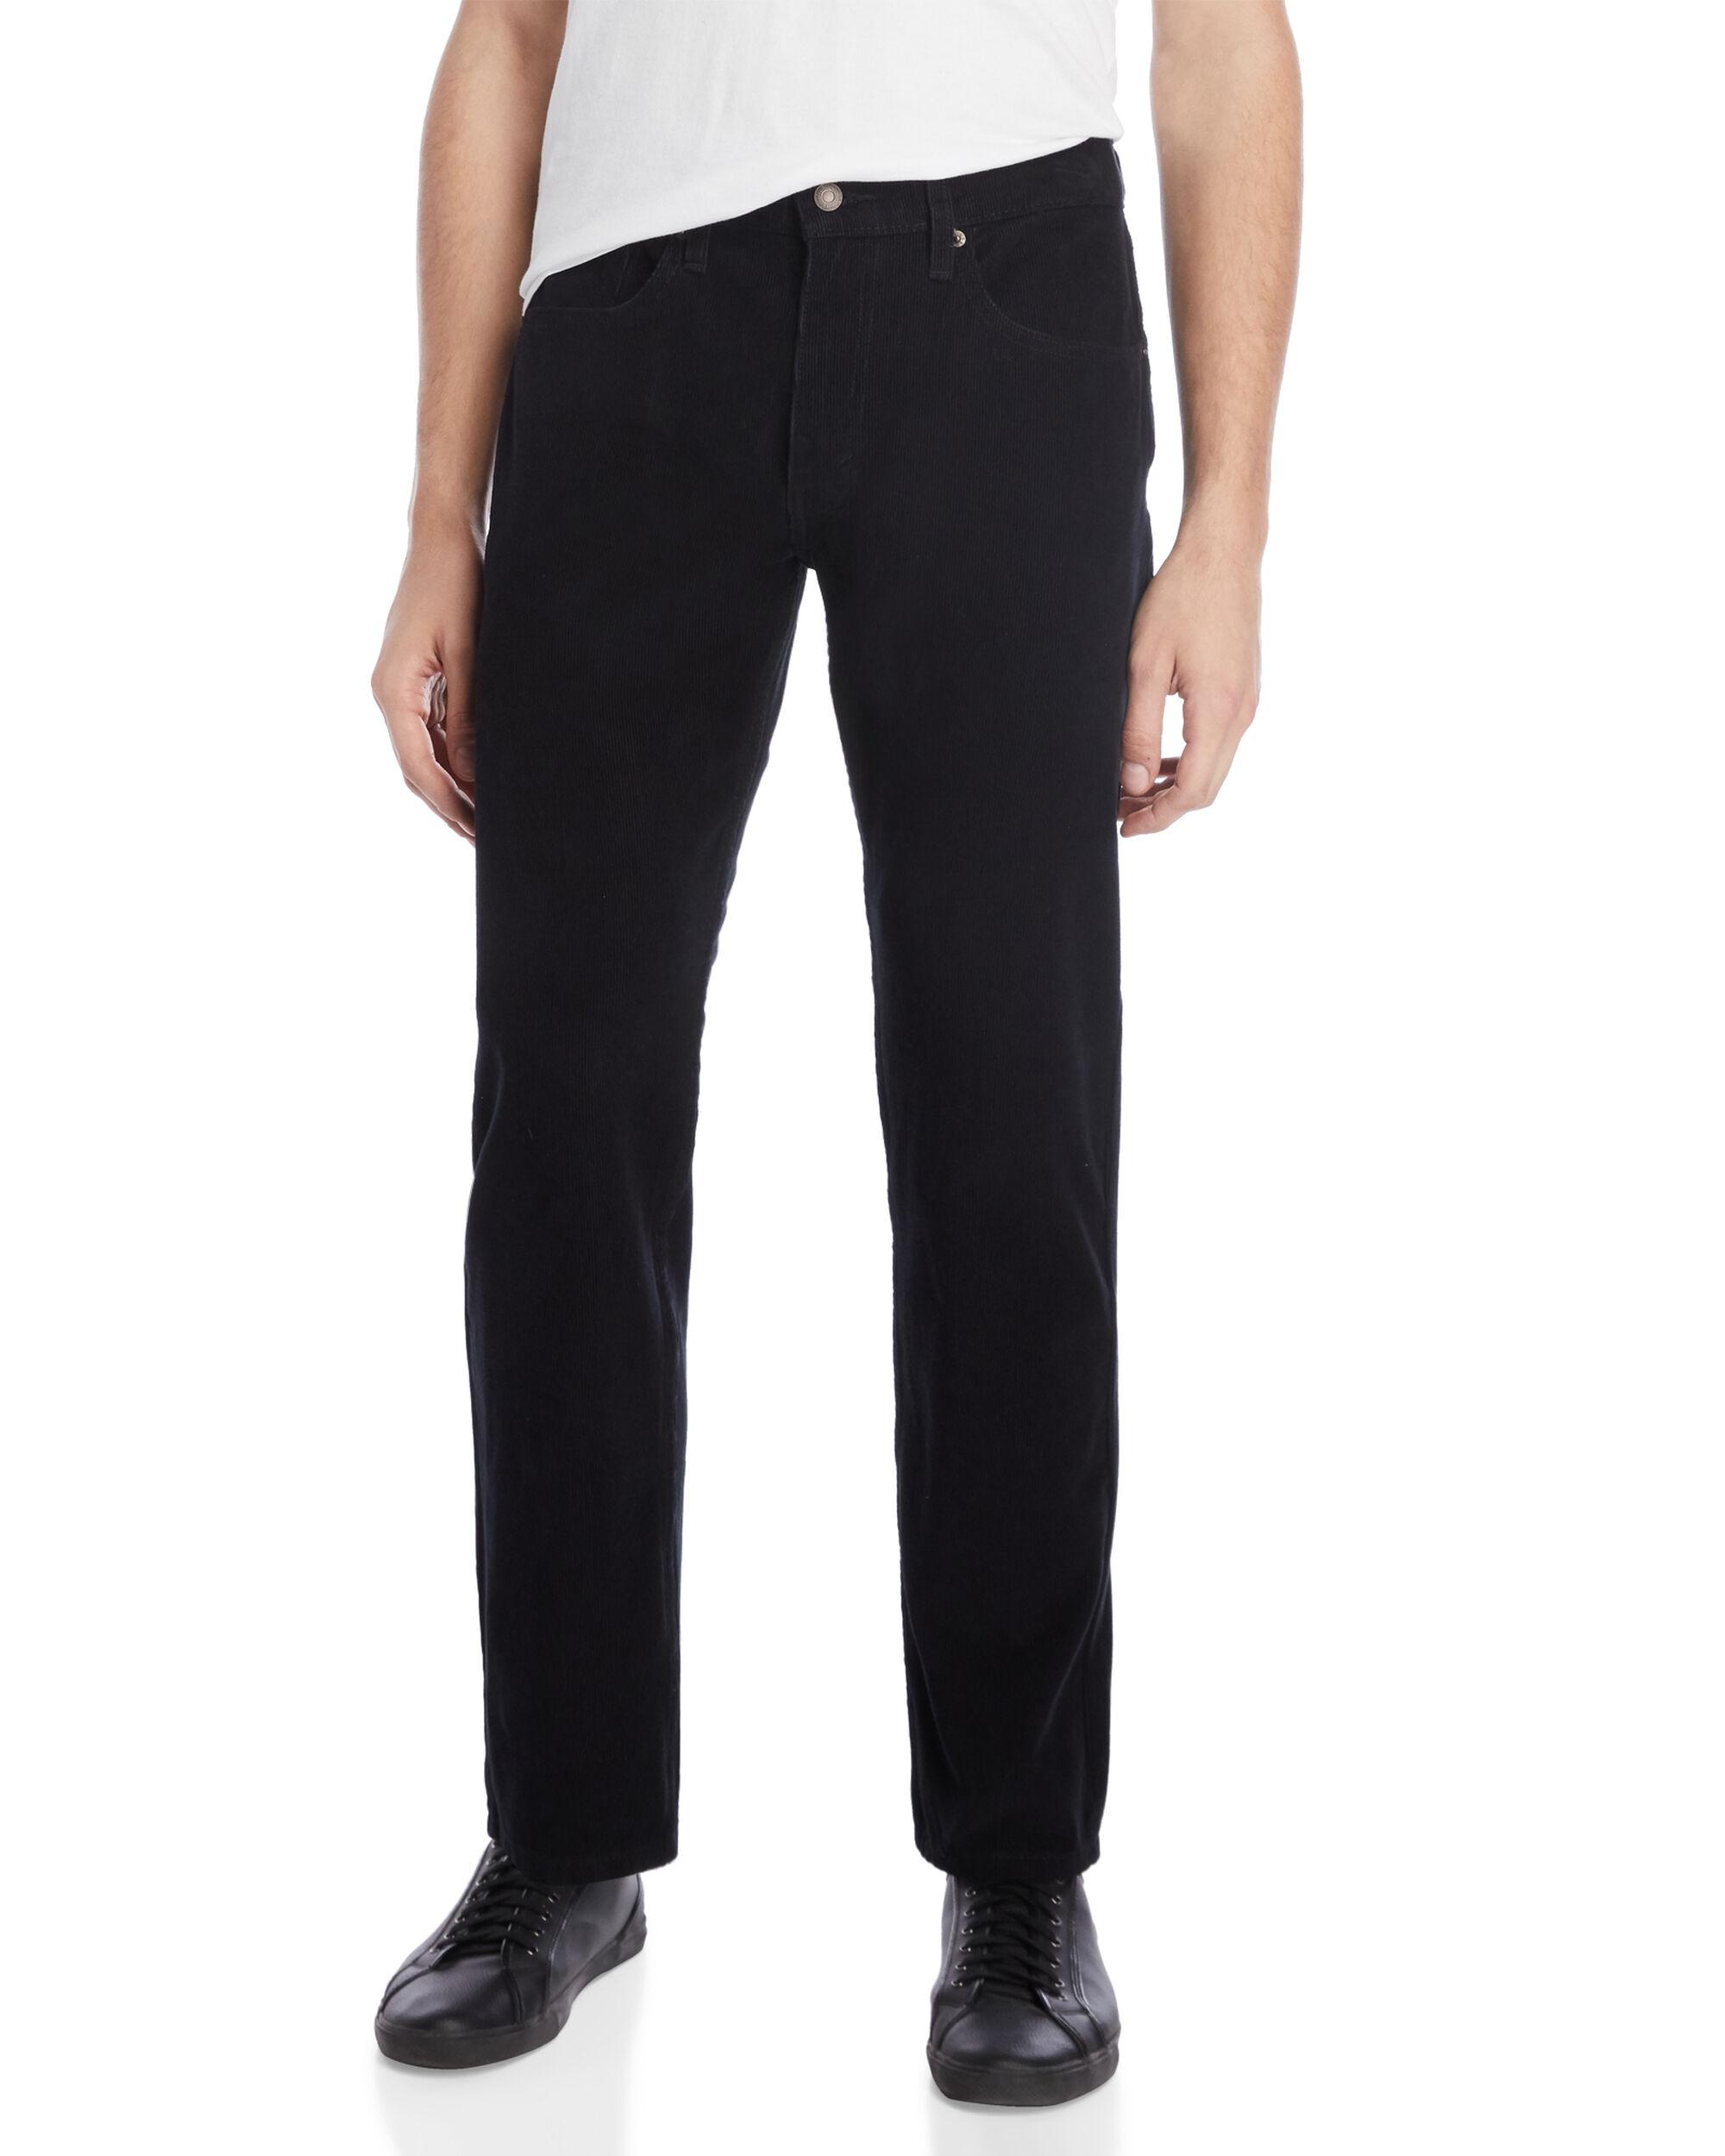 Levi's Black 502 Regular Taper Corduroy Pants for Men - Lyst